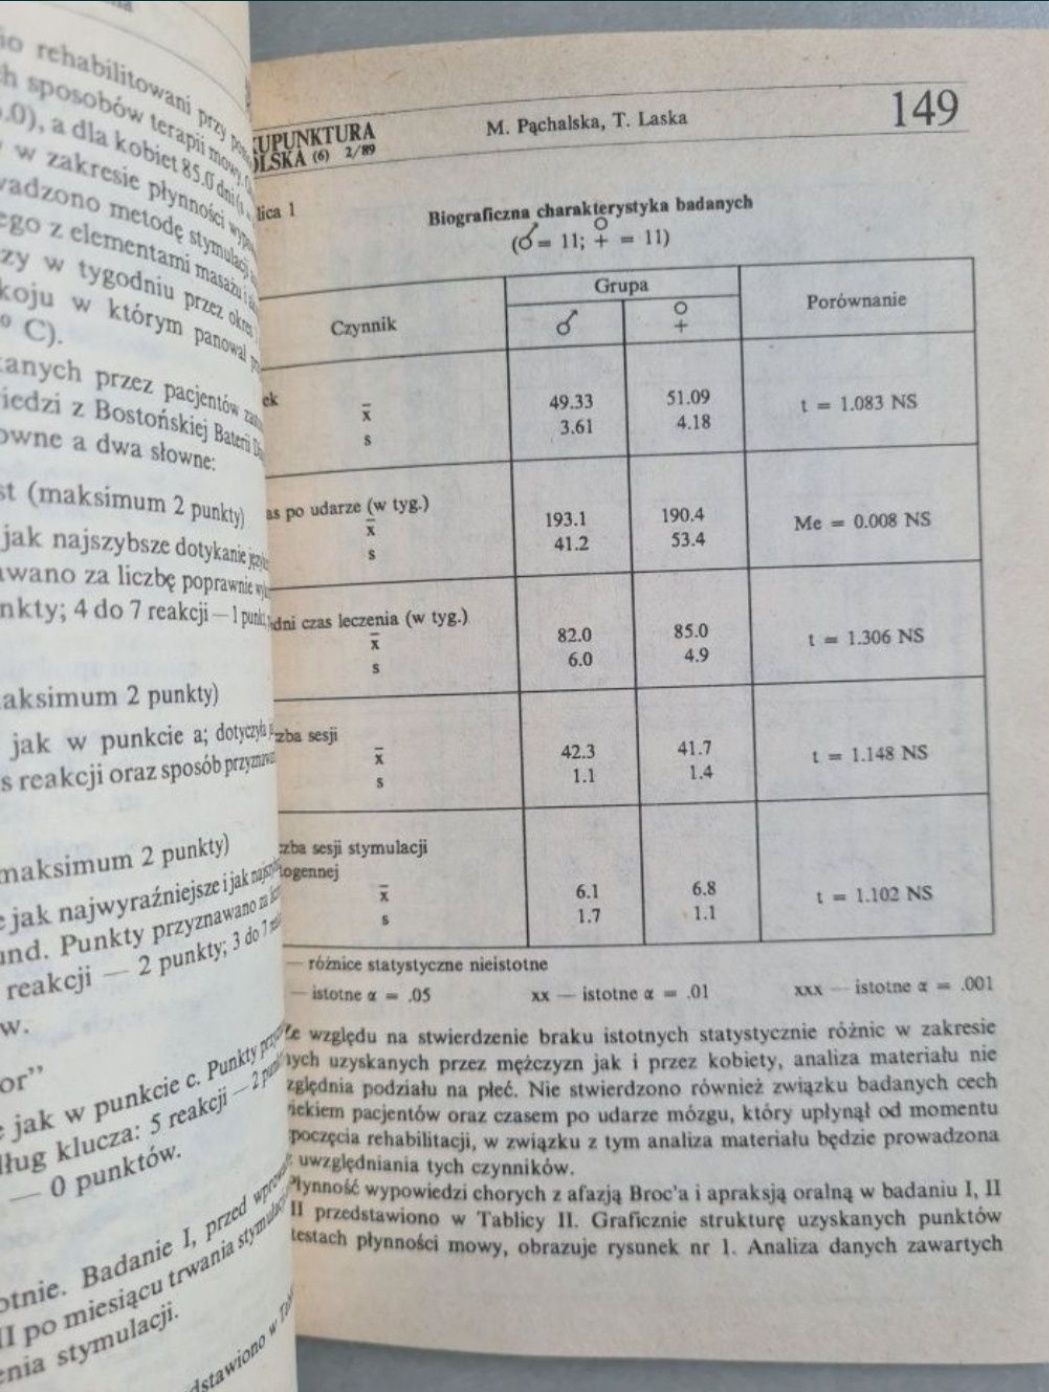 Akupunktura polska (6) 2/89 - Kwartalnik